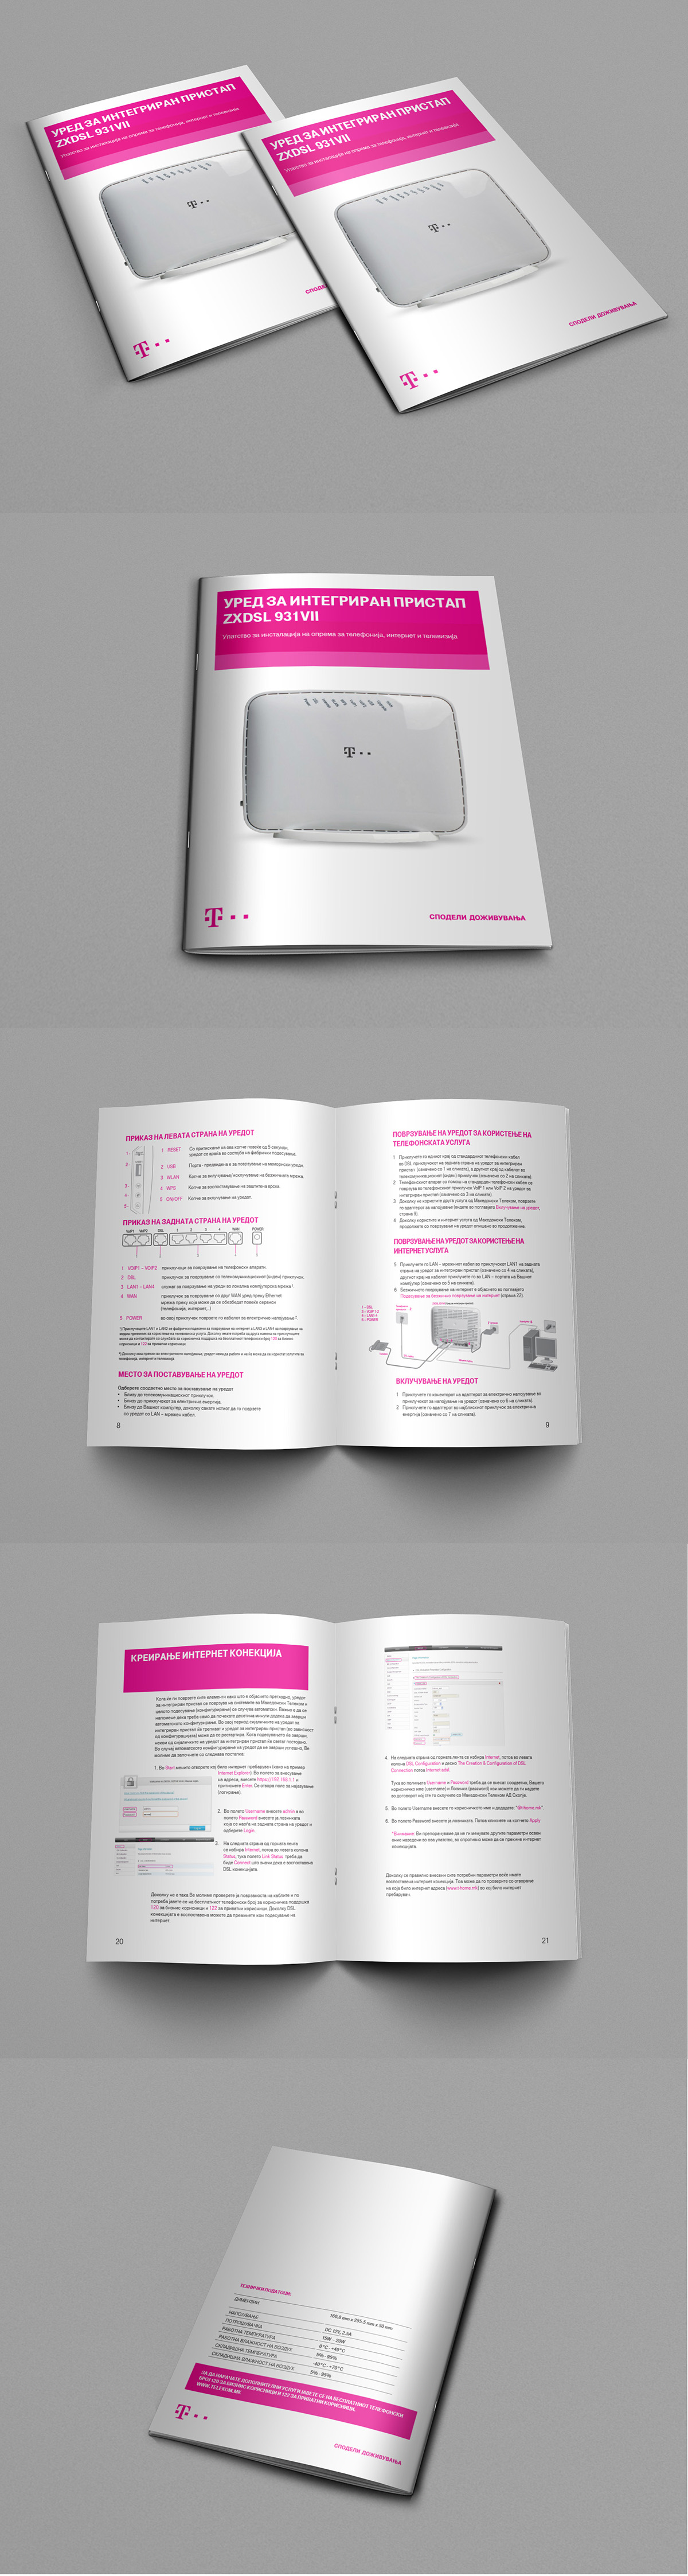 Telekom macedonia box product design  graphic design  design manual device